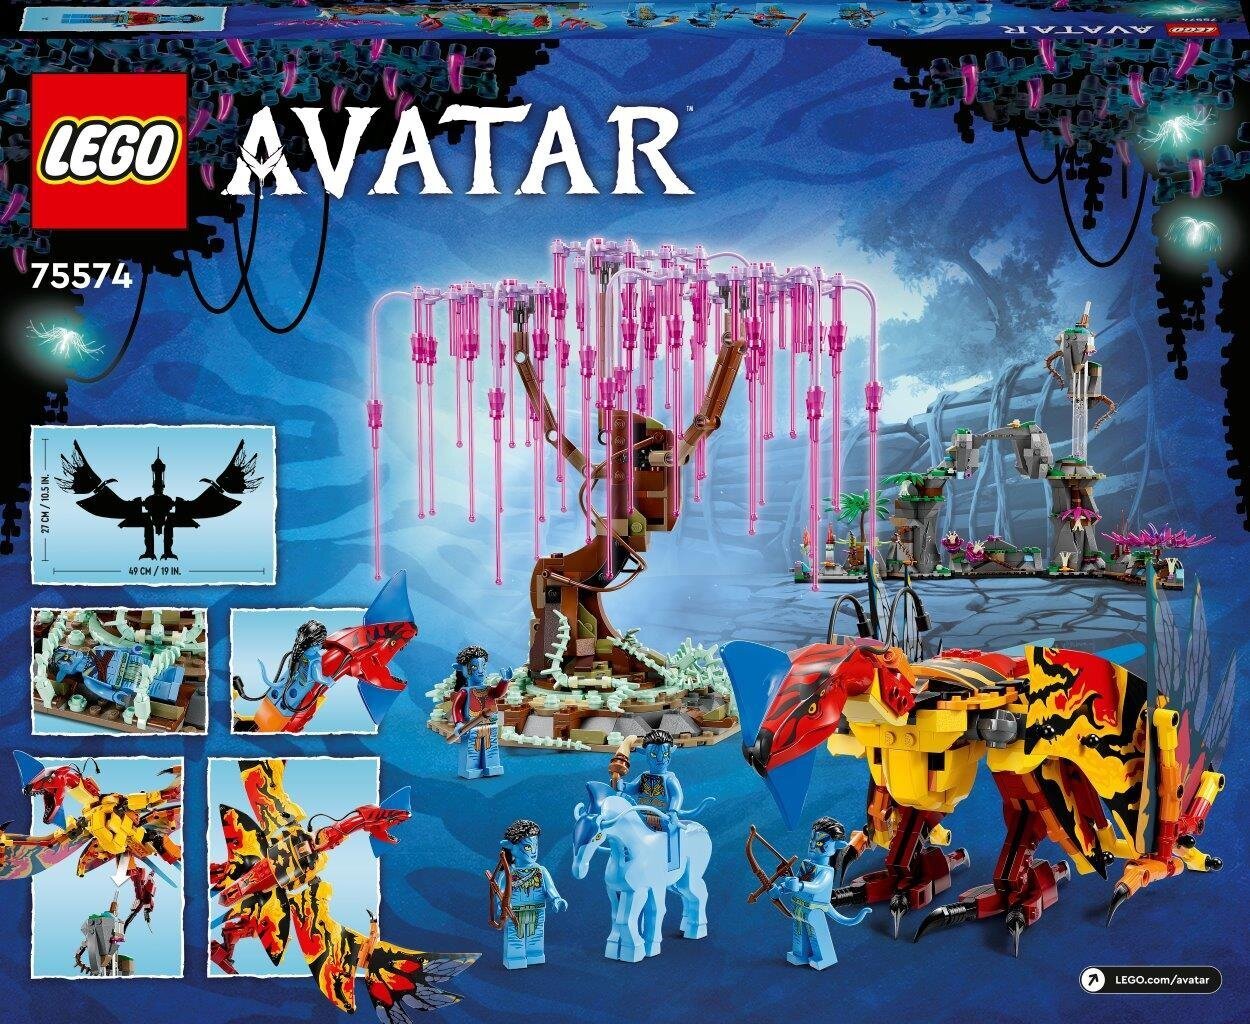 75574 LEGO® Avatar Toruks Makto un Dvēseļu koks цена и информация | Konstruktori | 220.lv